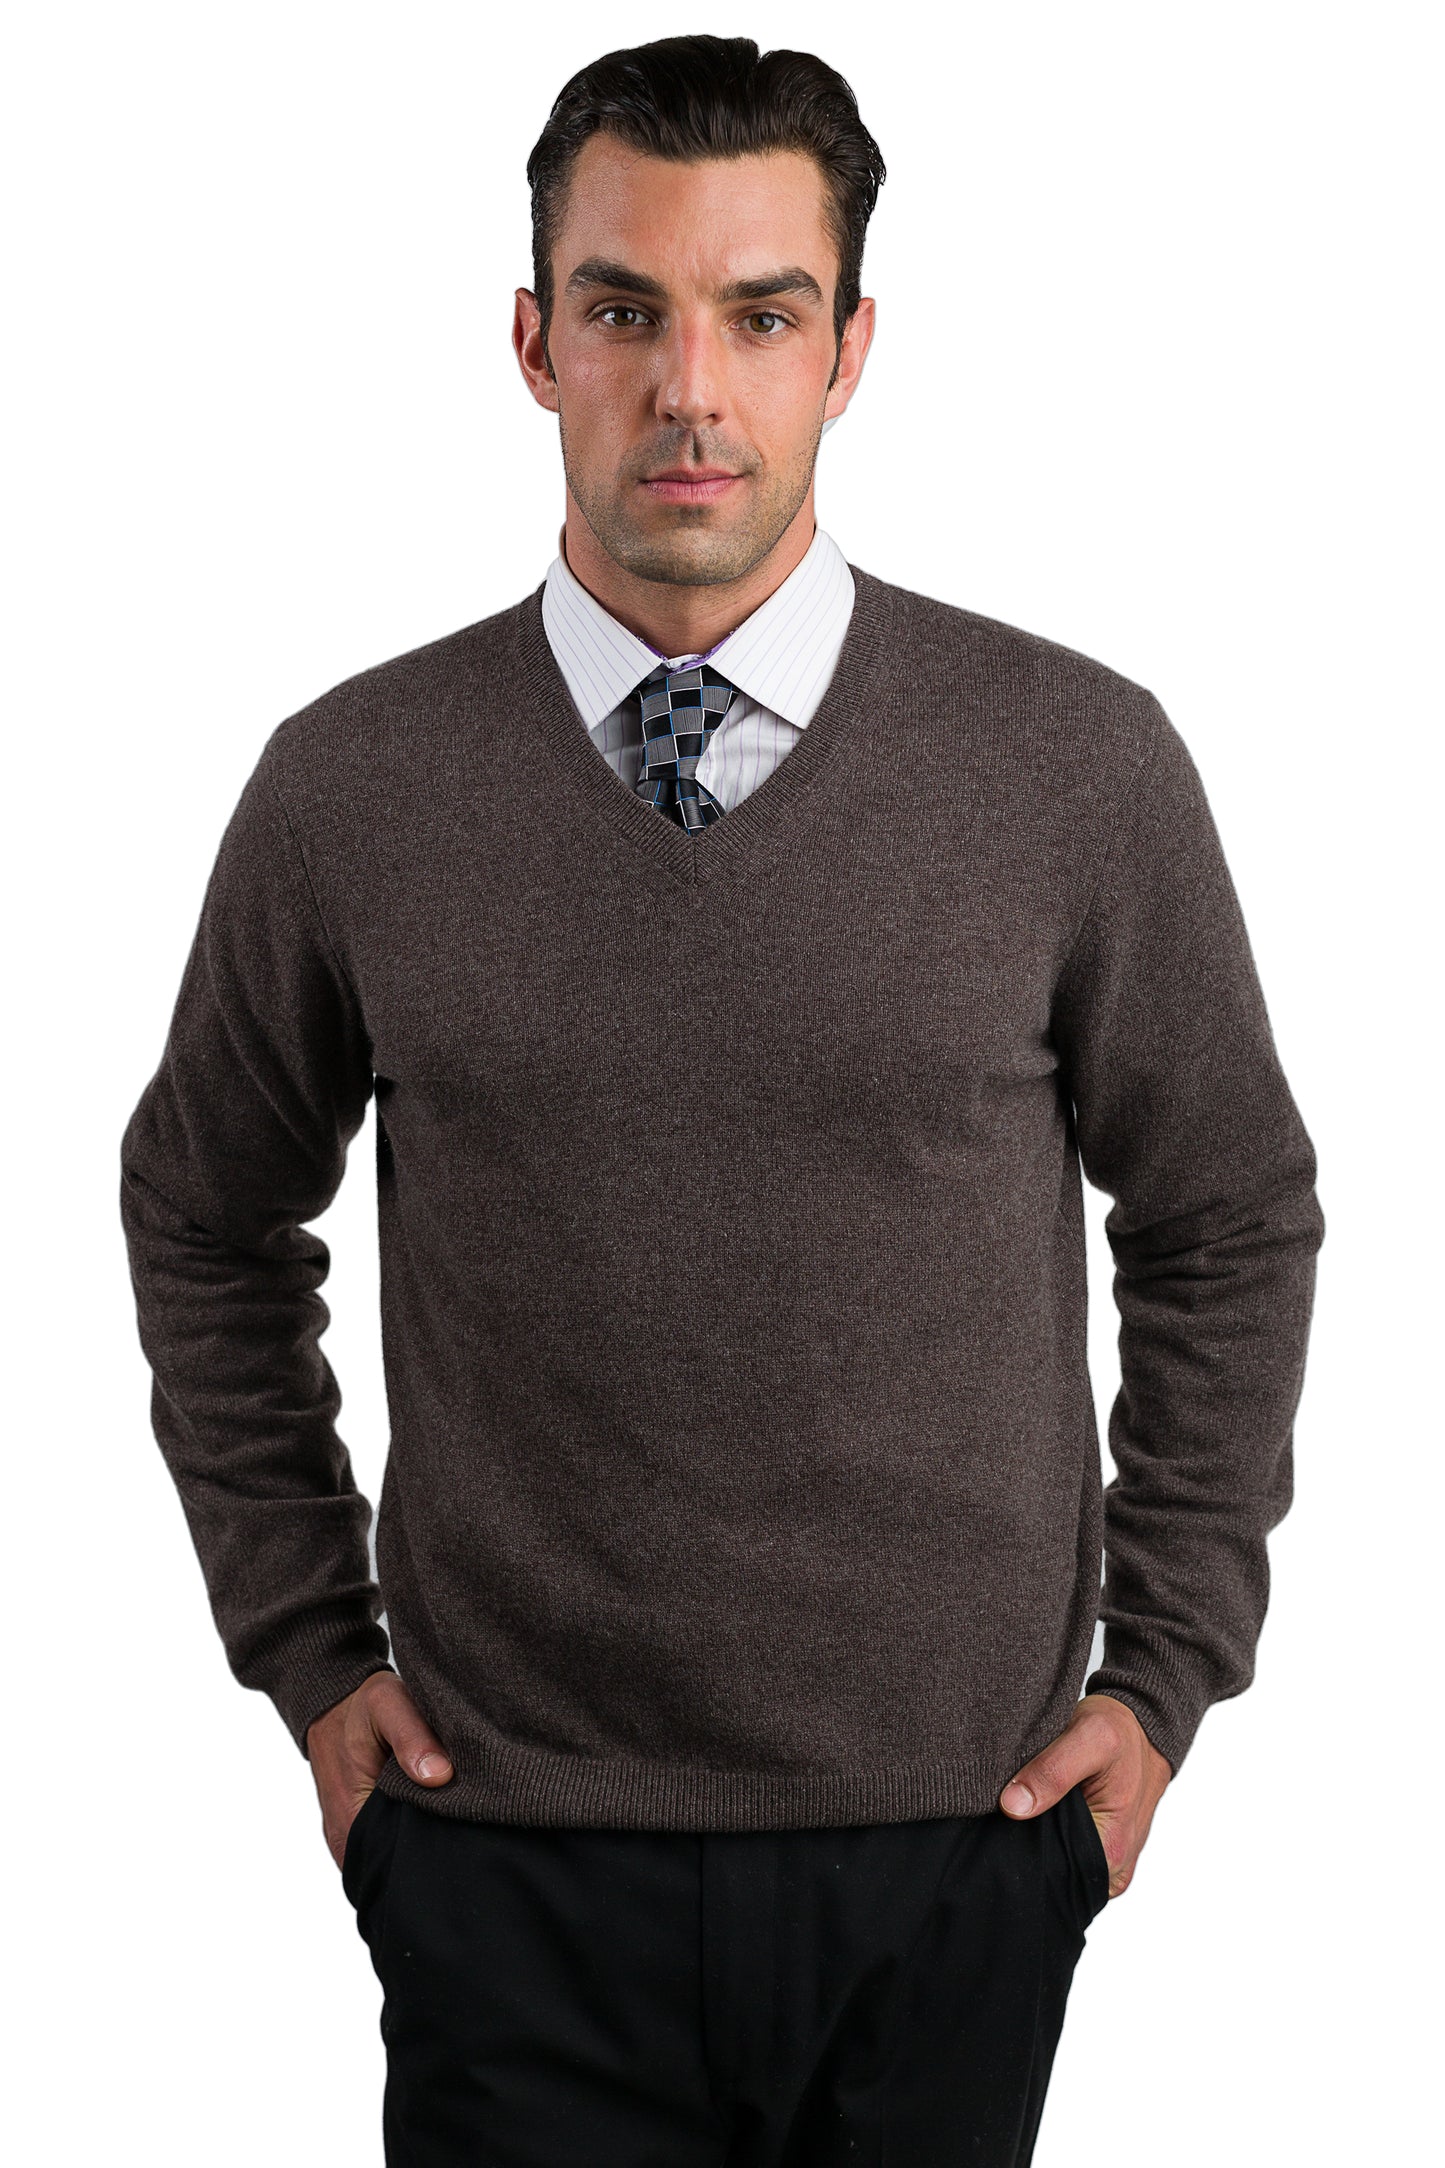 JENNIE LIU Men's 100% Pure Cashmere Long Sleeve Pullover V Neck Sweater